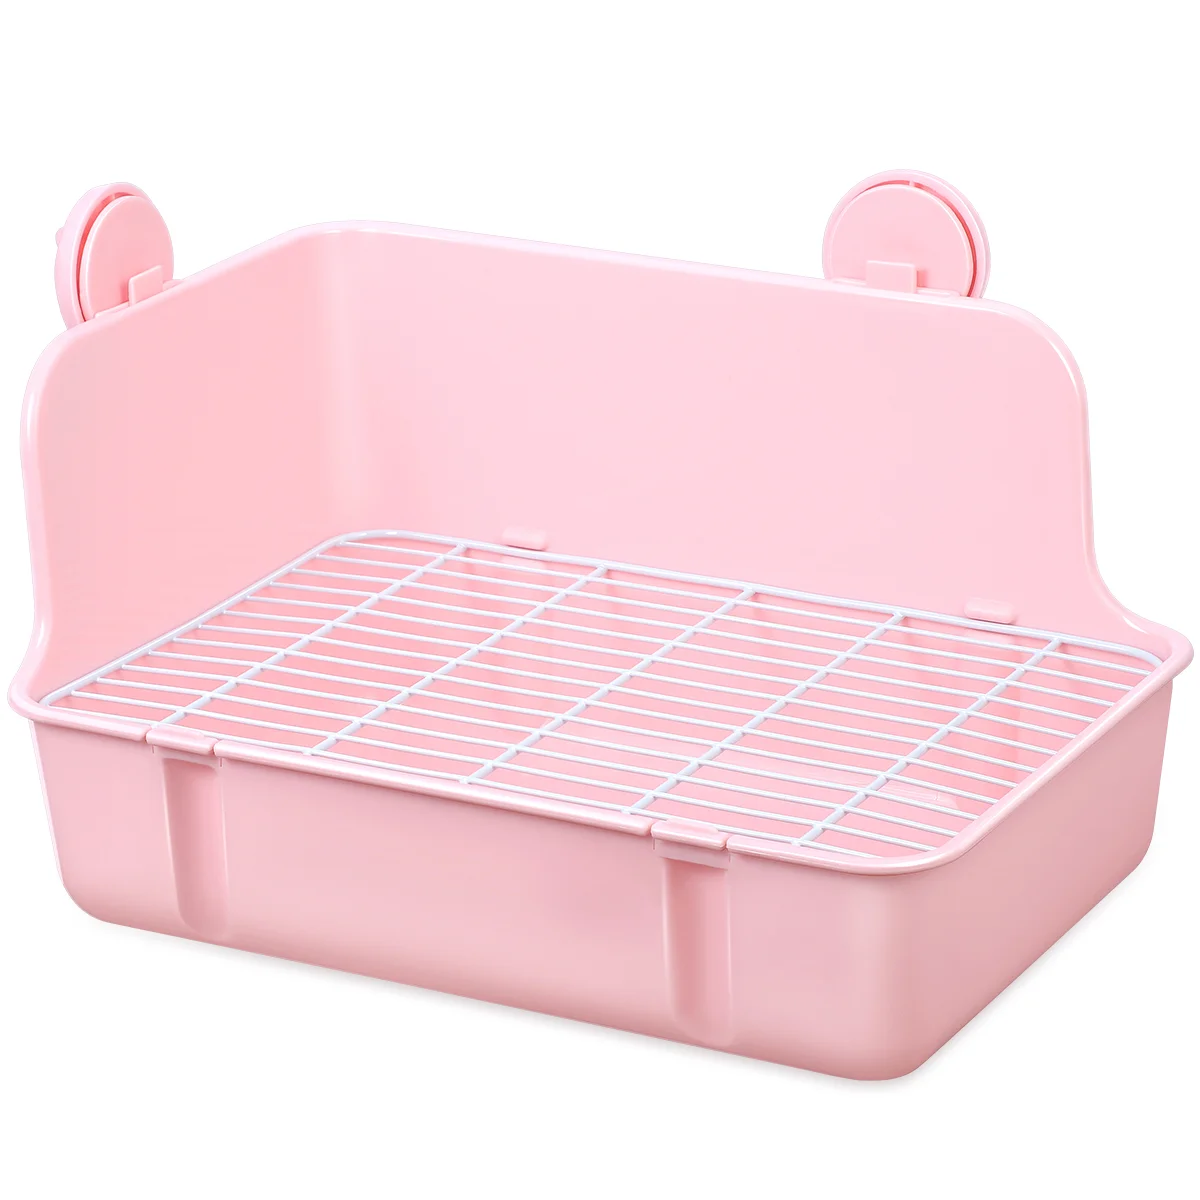 

POPETPOP Small Pet Toilet Lightweight Plastic Small Animal Potty Portable Pet Pan for Hamster Rabbit (Pink)